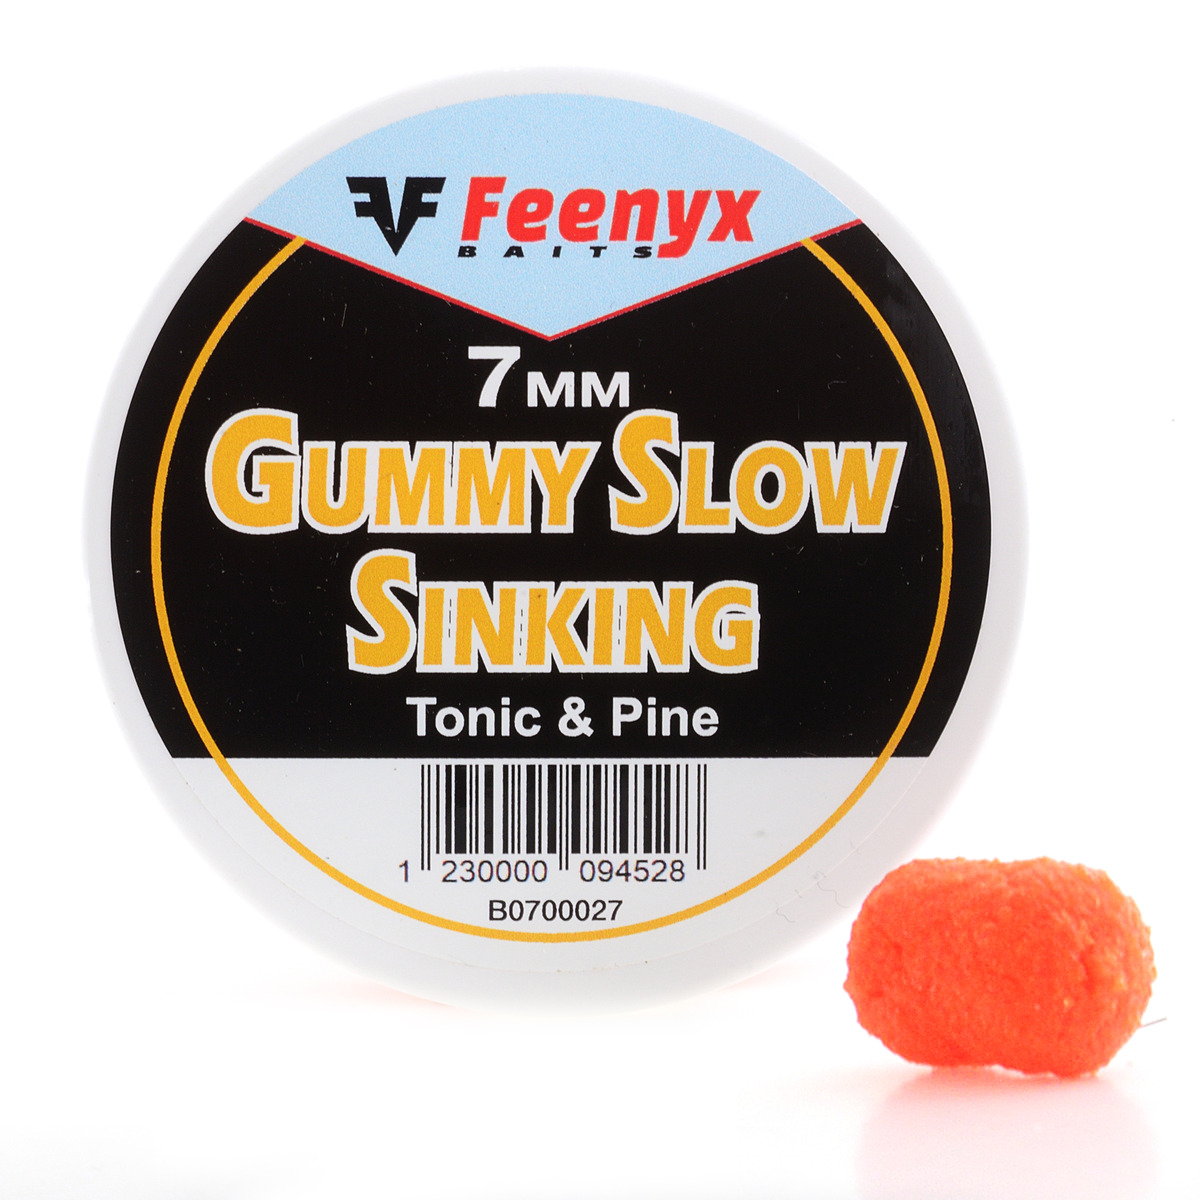 Feenyx Gummy Slow Sinking Tonic & Pine - 7 mm